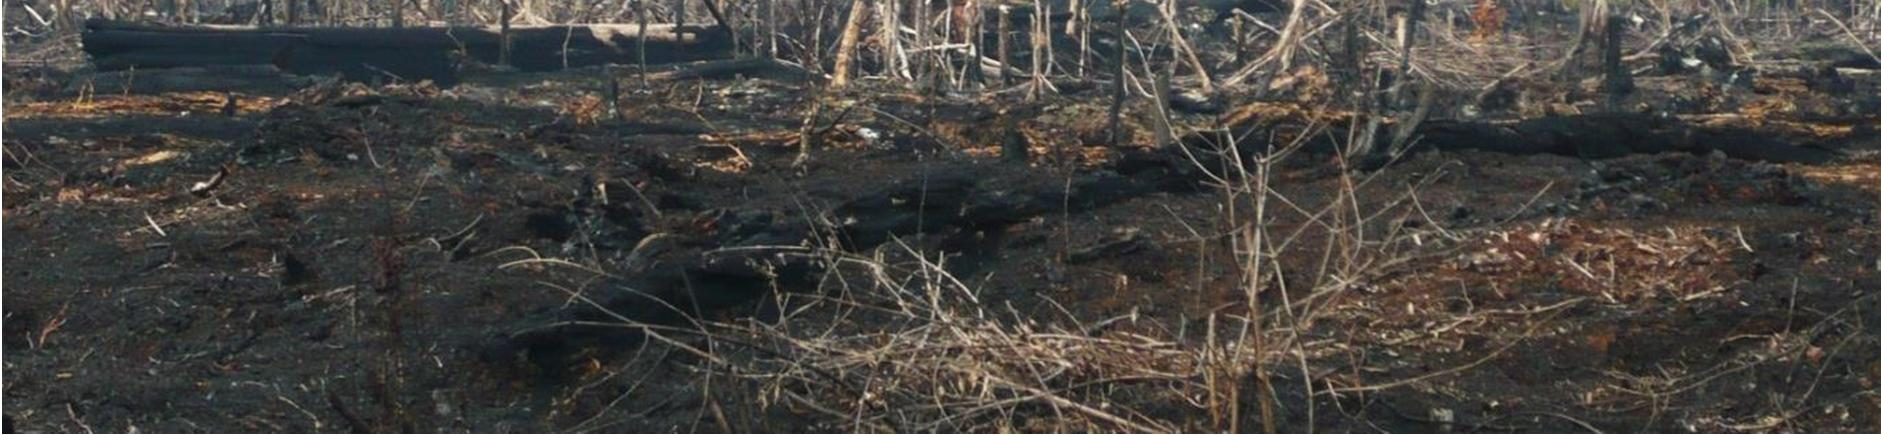 konsesi ini juga diamuk api kebakaran. Foto diambil oleh Eyes on the Forest pada N1 49'56.56" E101 6'